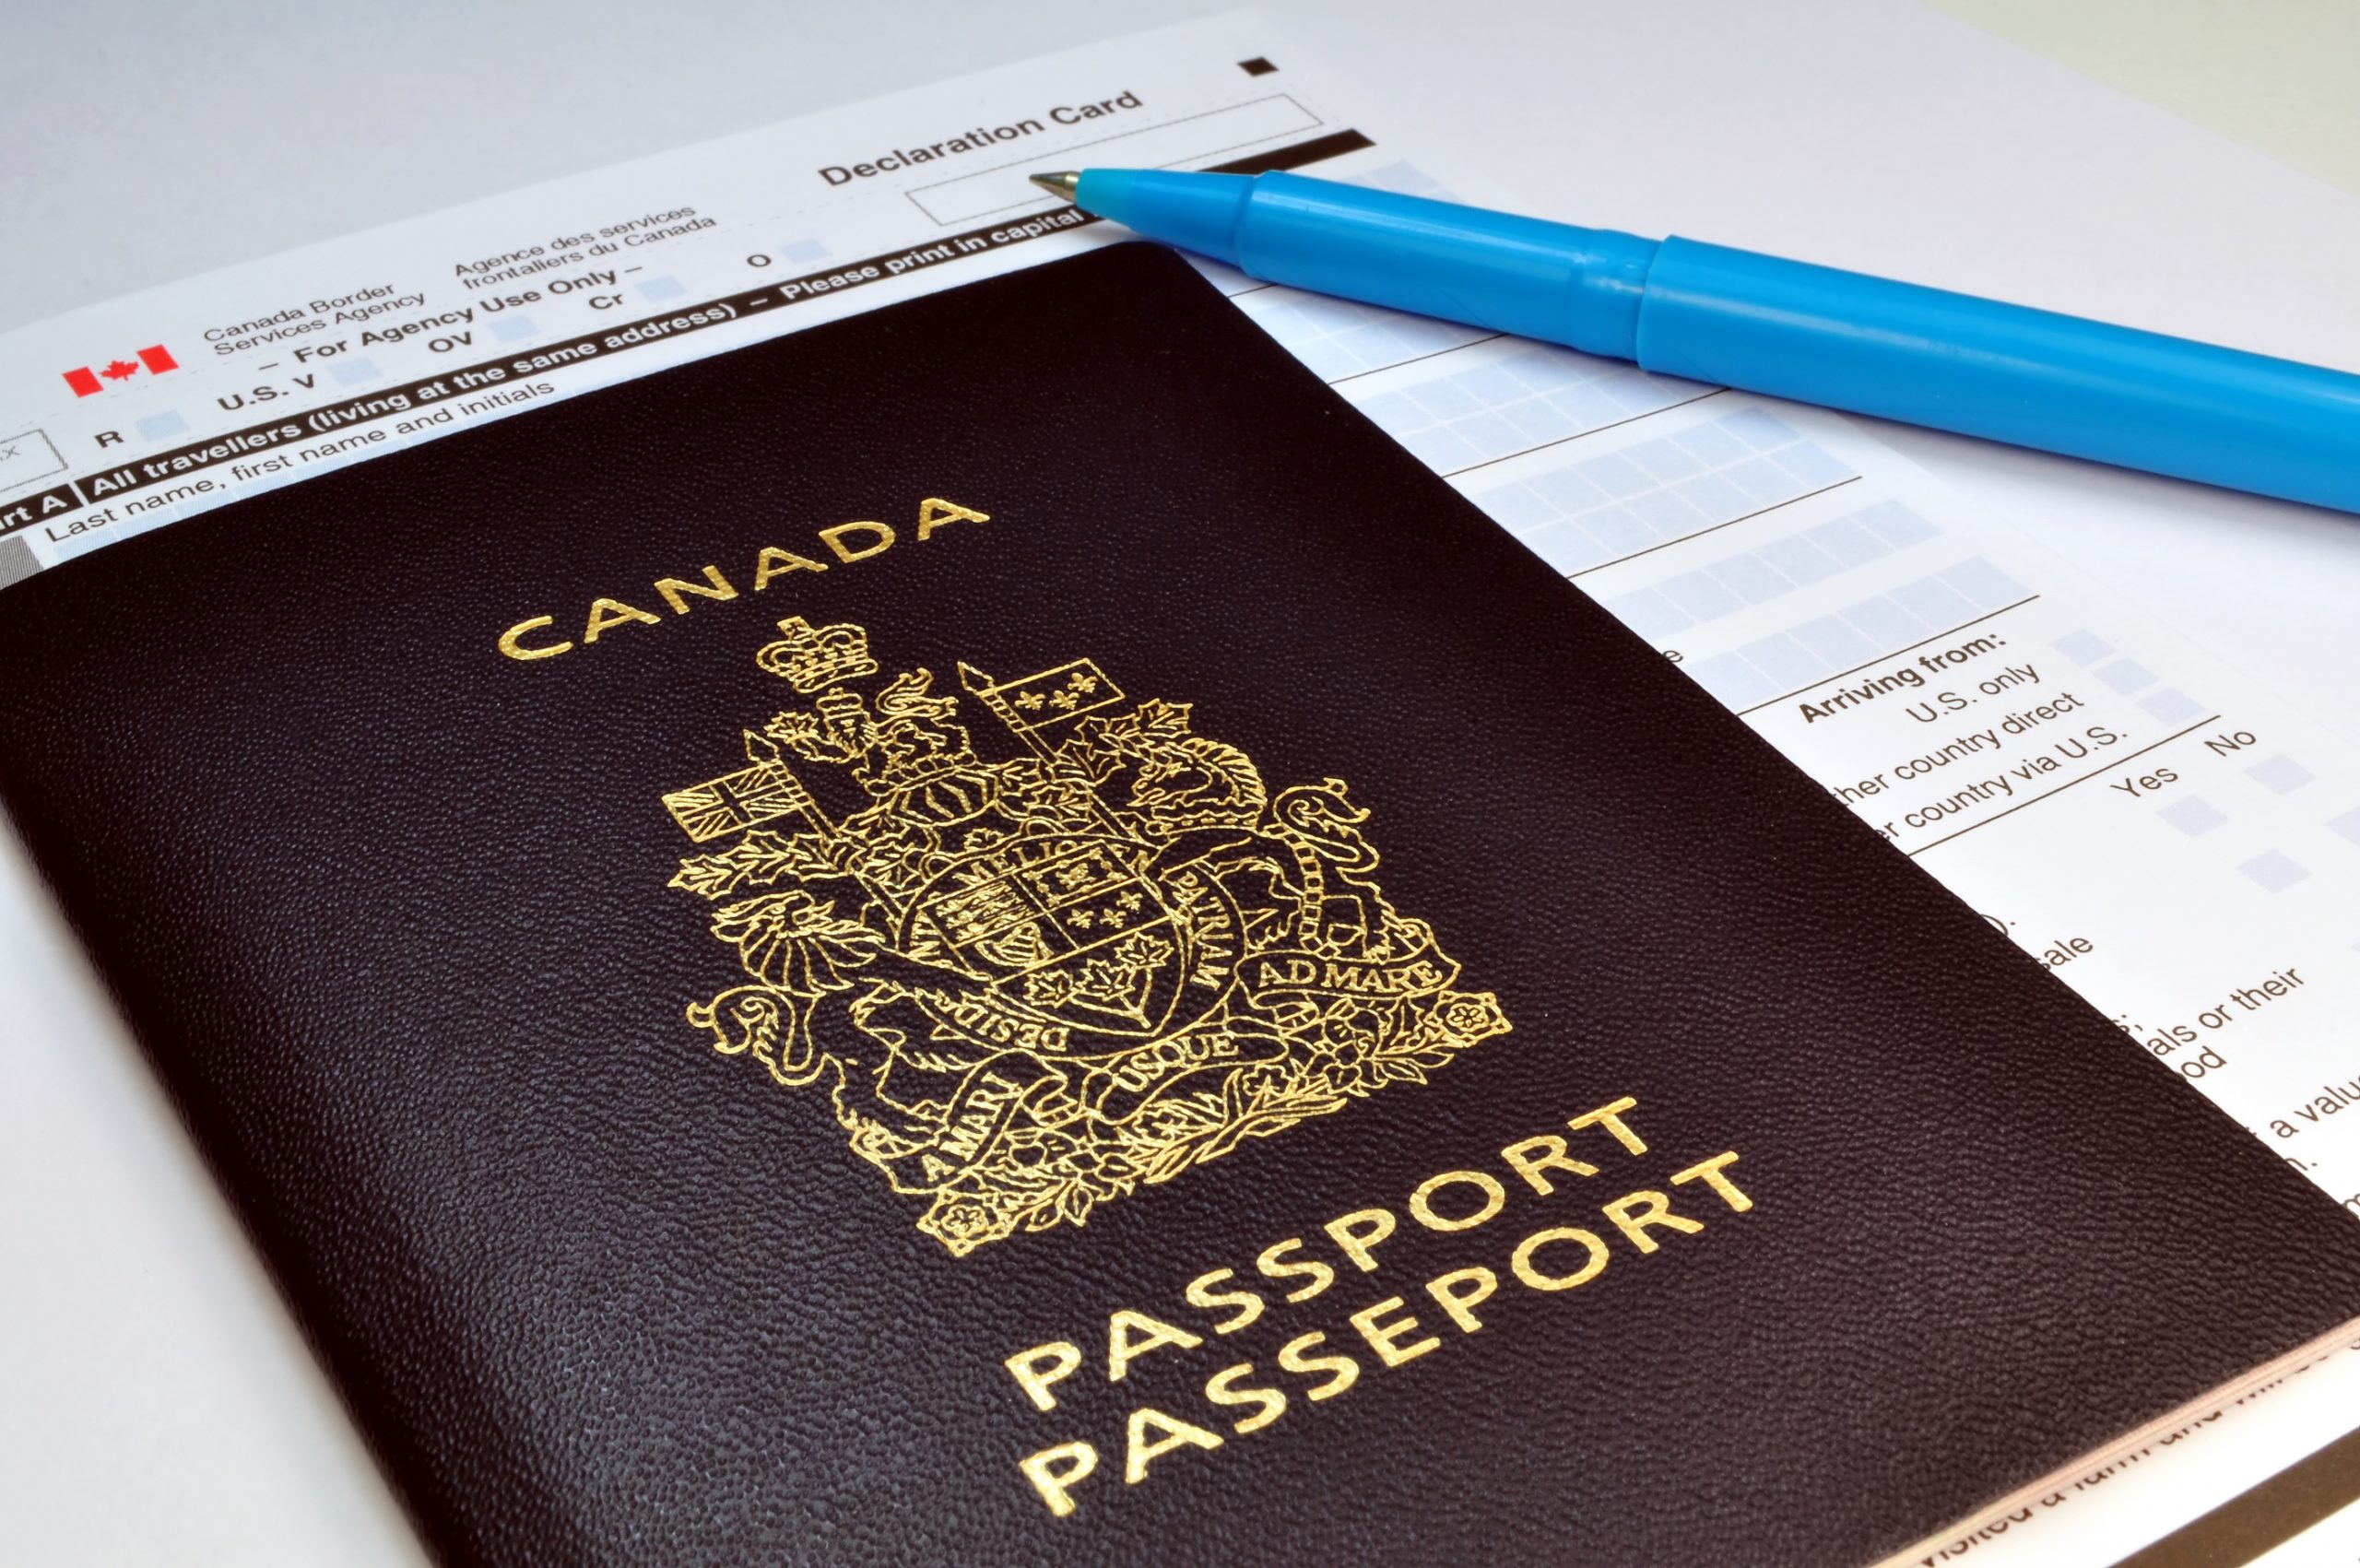 Canada to organize online citizenship ceremonies